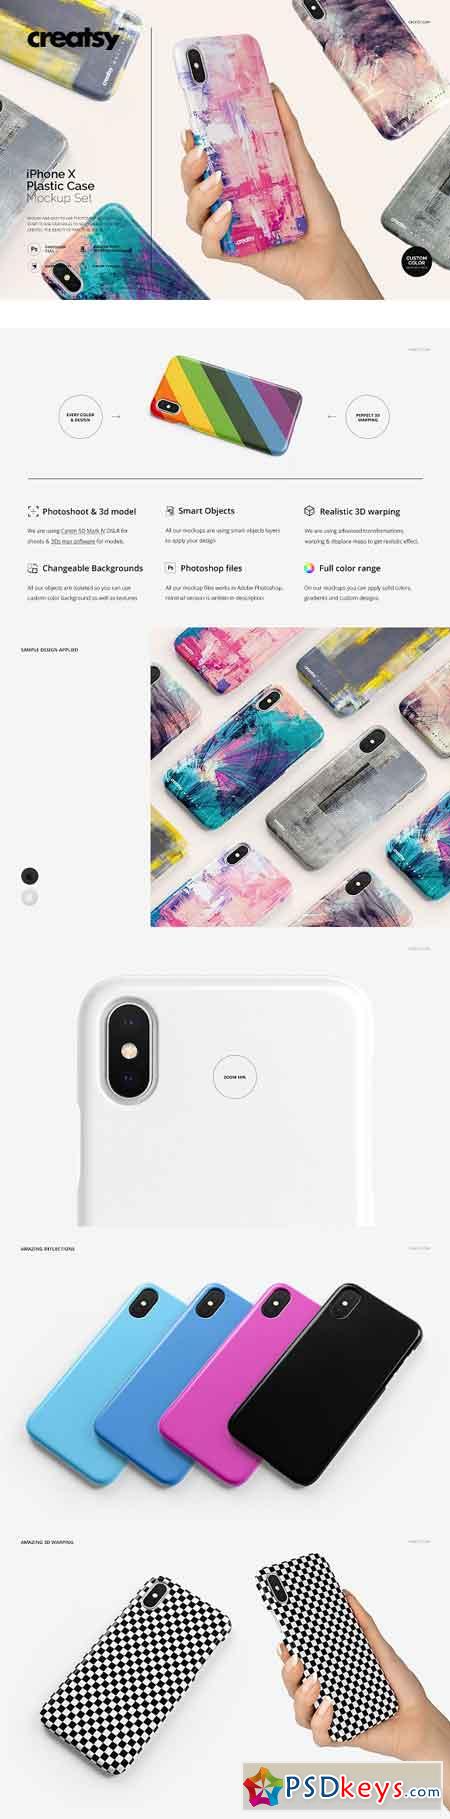 iPhone X Plastic Case Mockup Set 2115910